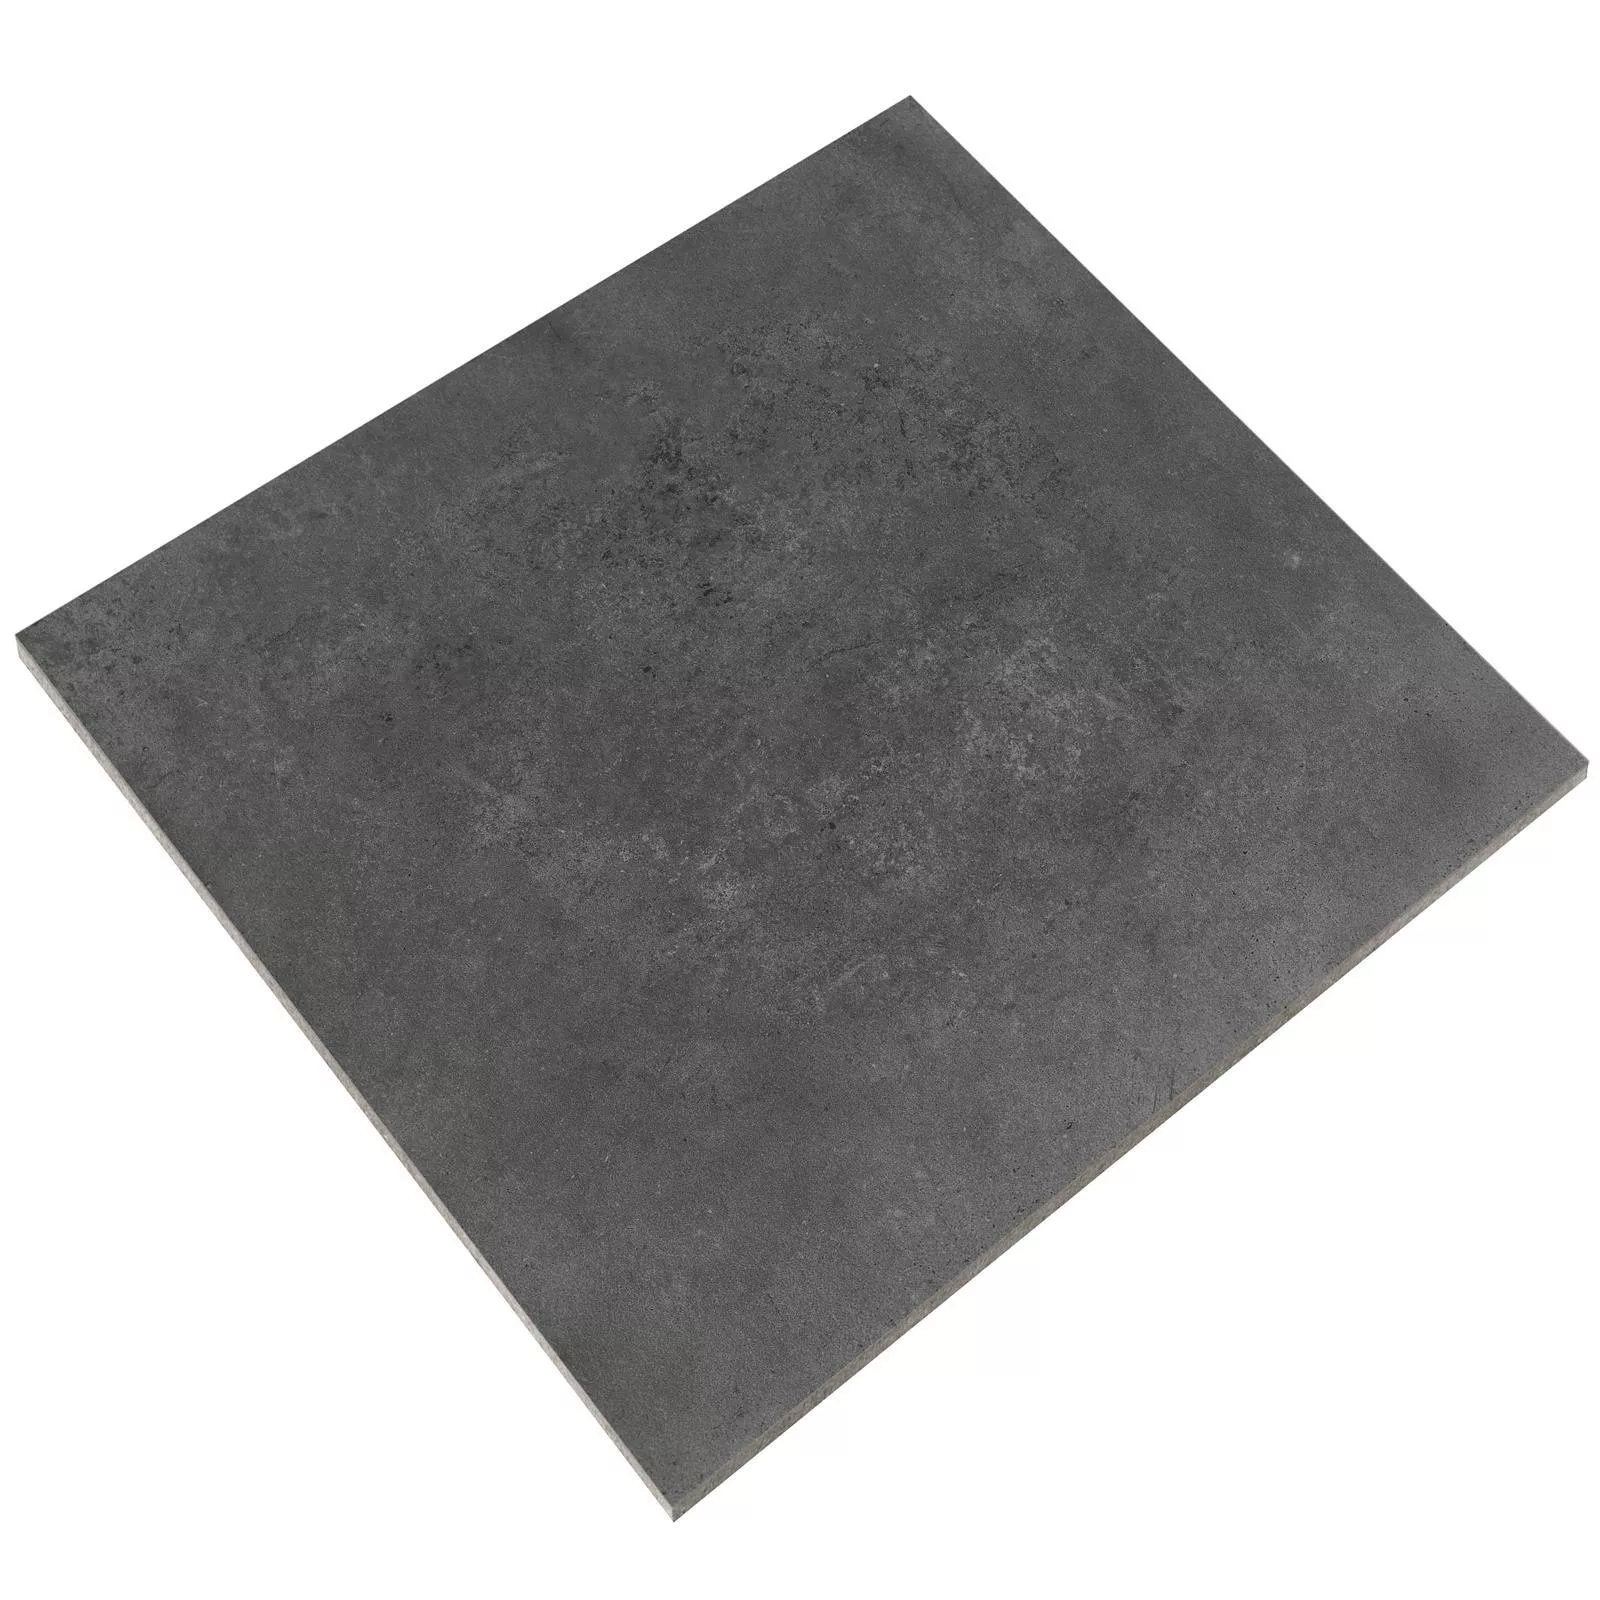 Sample Vloertegels Cement Optic Nepal Slim Donkergrijs 100x100cm